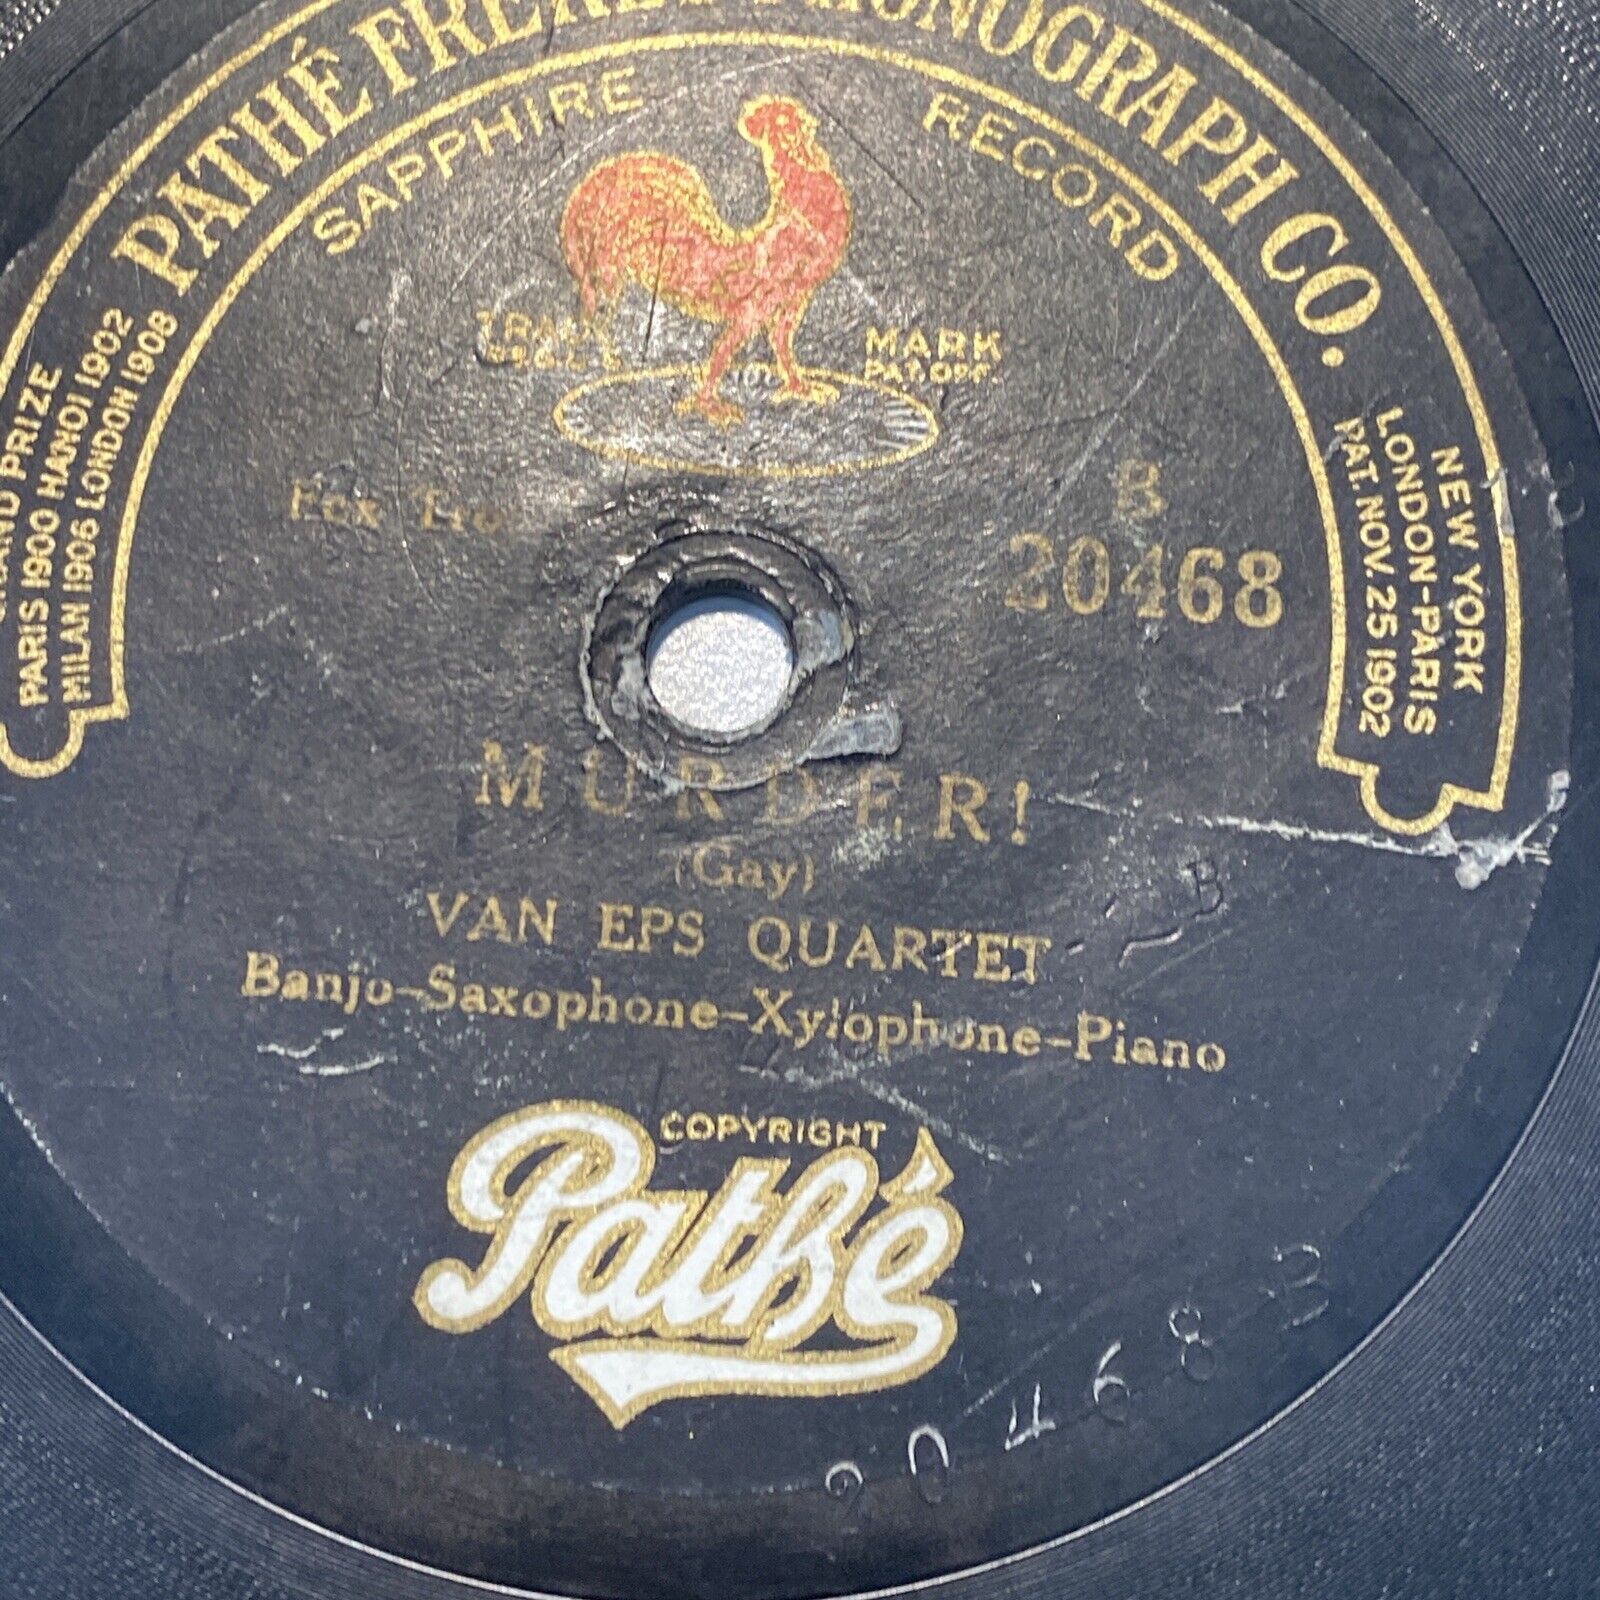 Van Eps Quartet 78 rpm PATHE 20468 Murder JAZZ 1920 Vertical V+